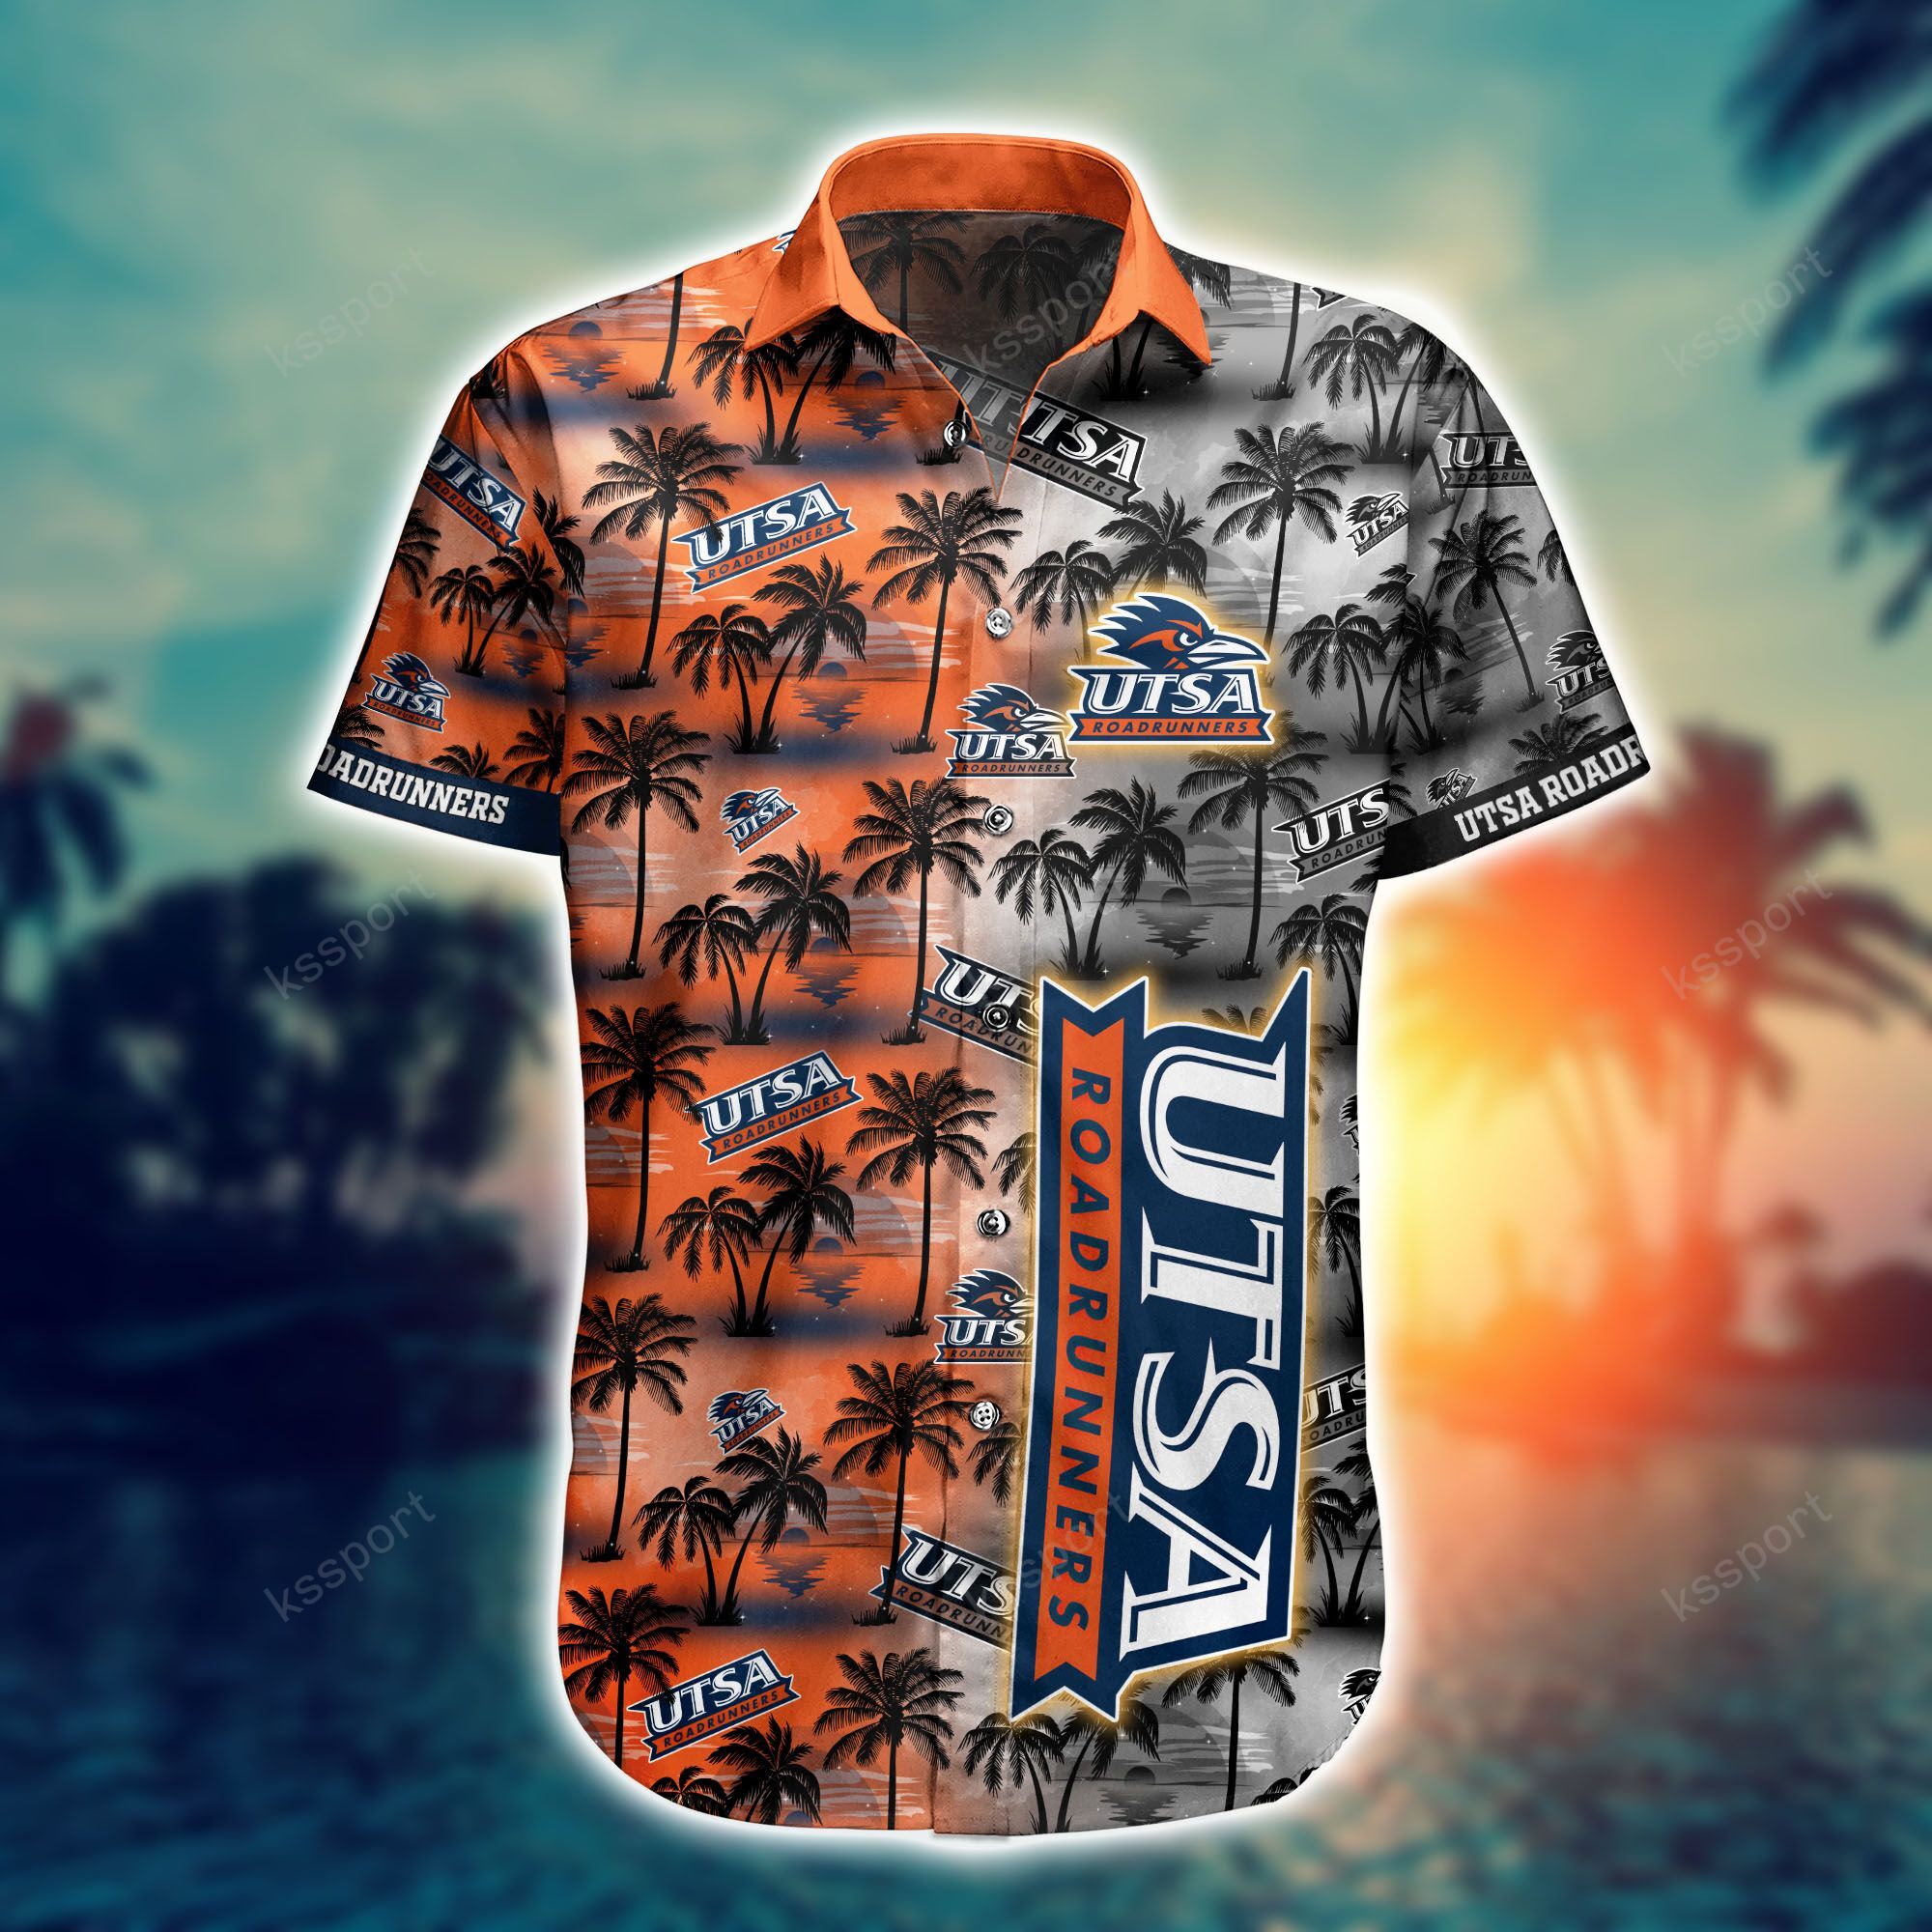 Hawaiian shirt and shorts is a great way to look stylish at a beach party 24